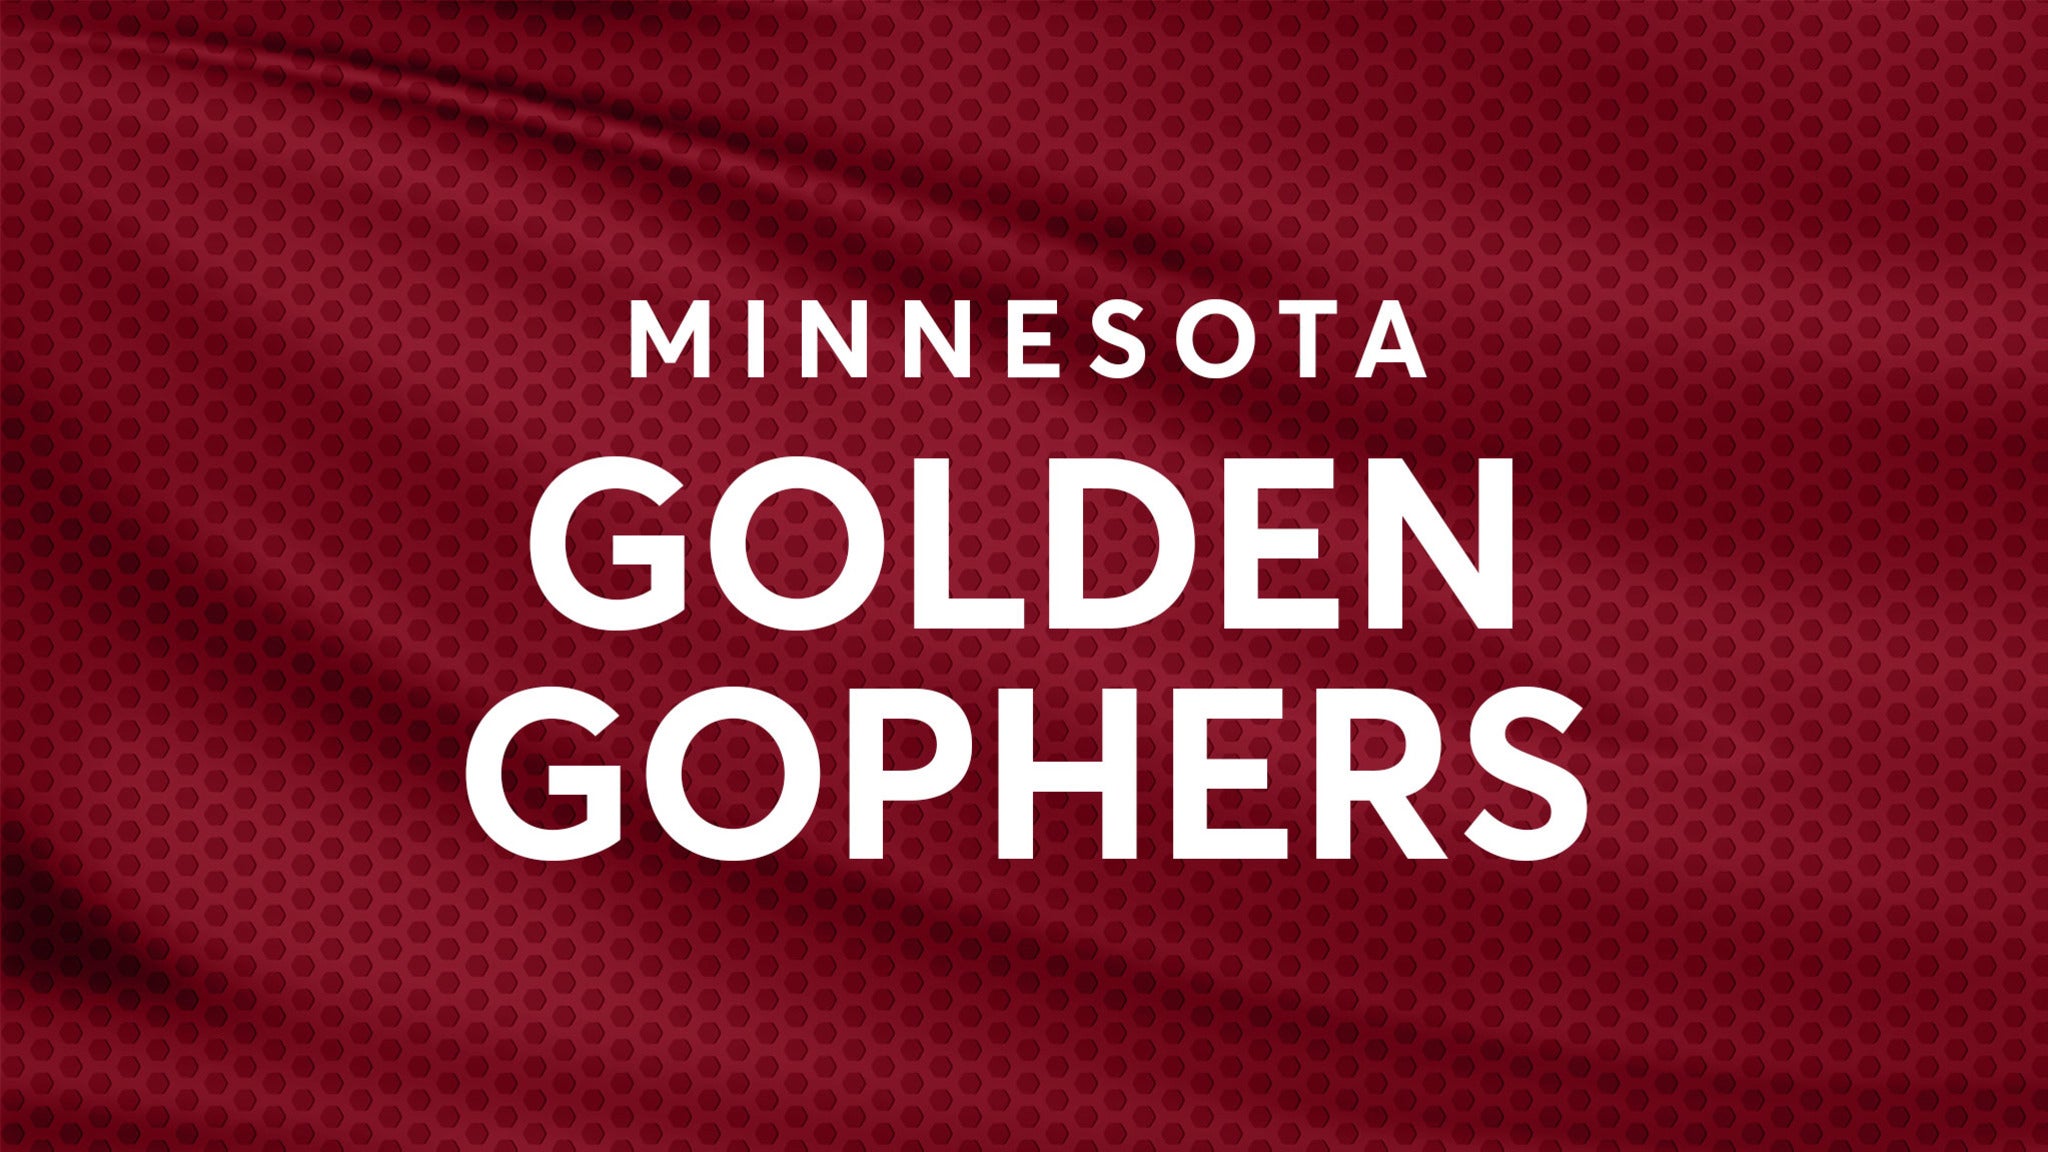 Minnesota Golden Gophers presale information on freepresalepasswords.com